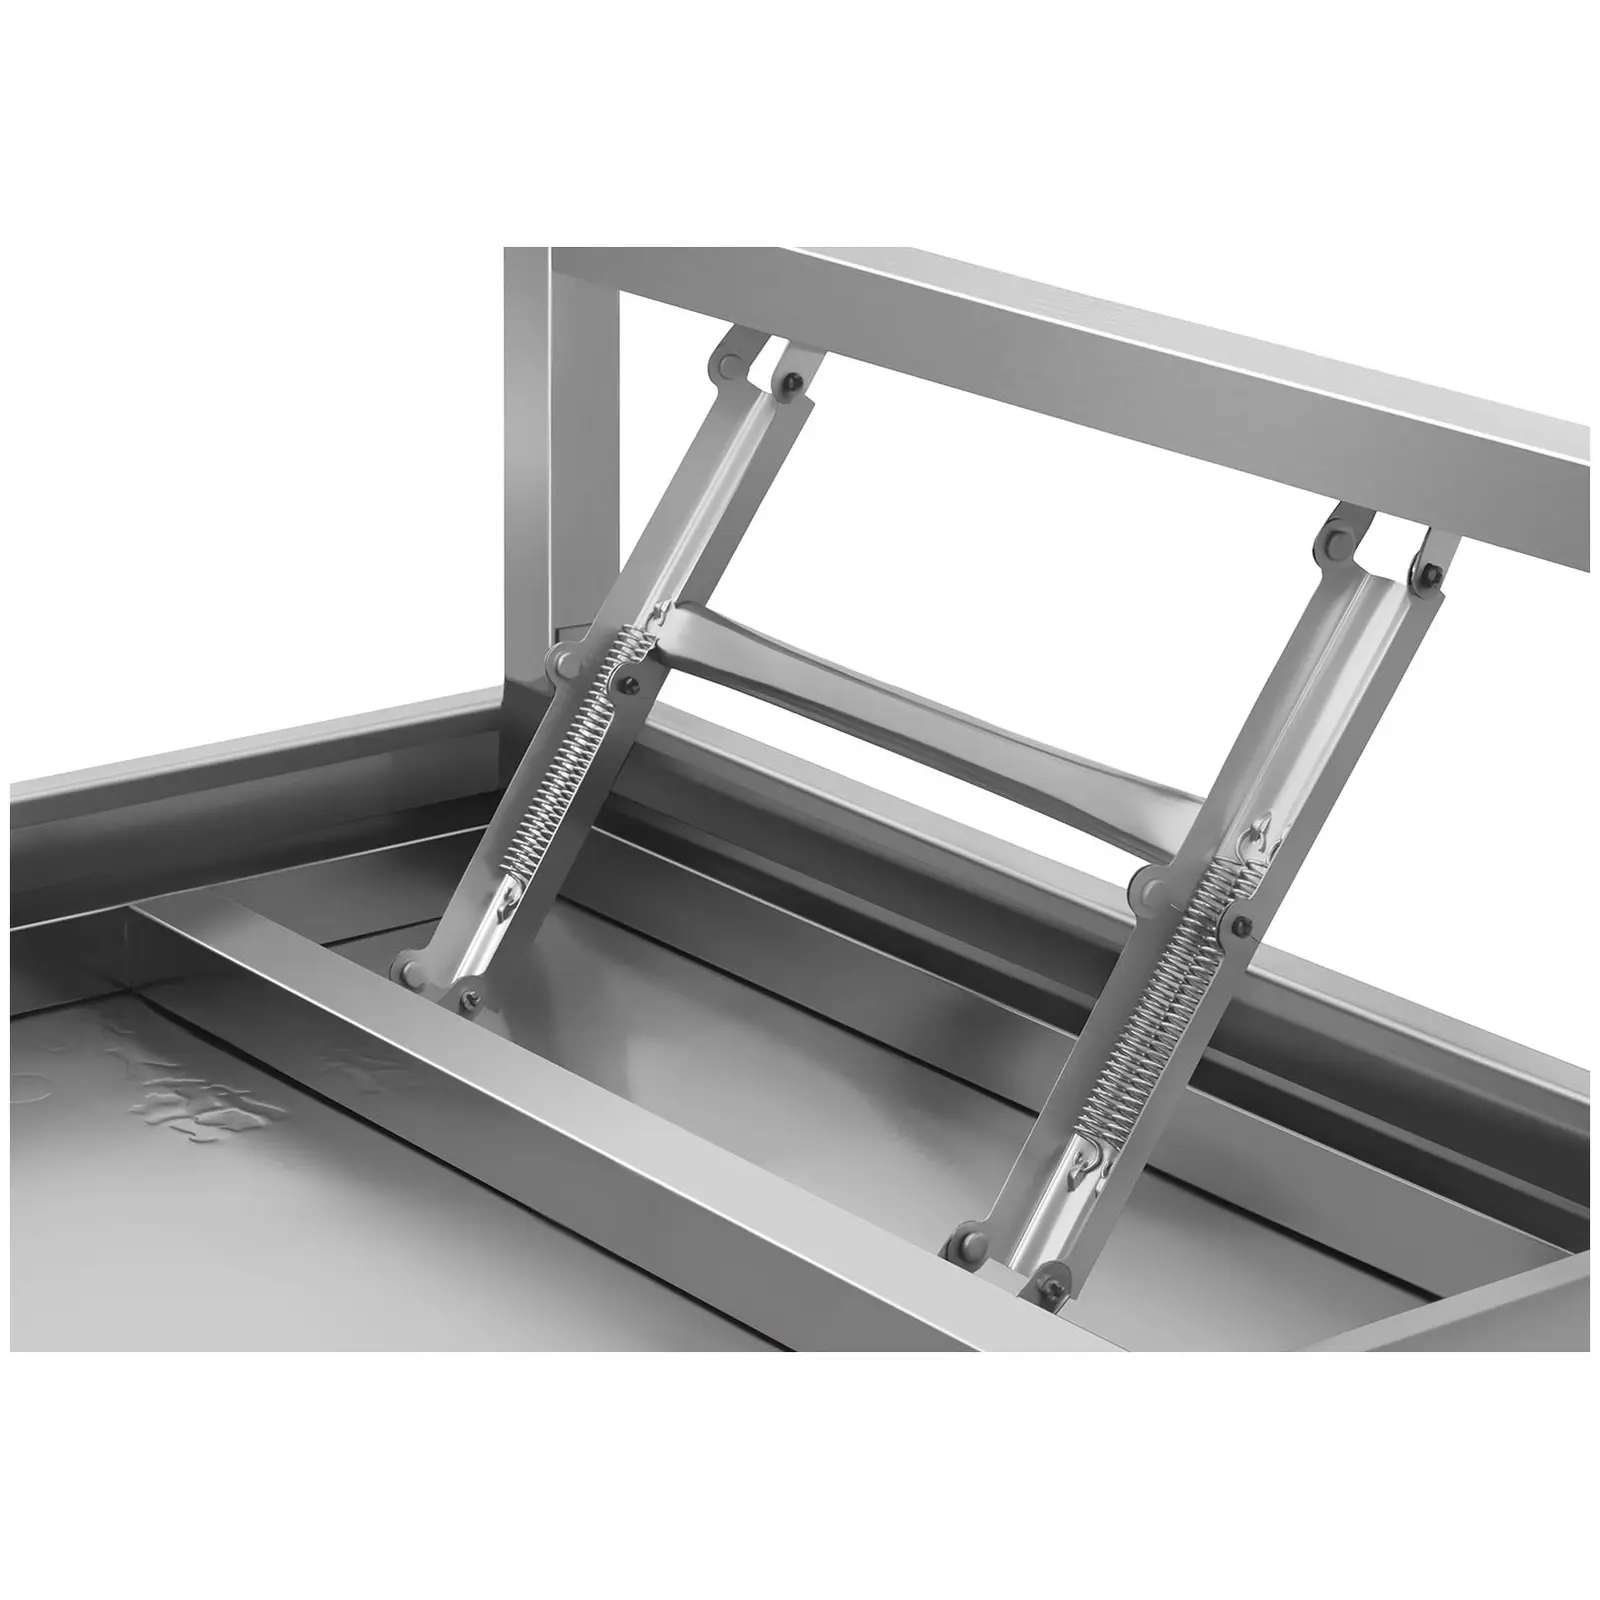 Folding Work Table - 60 x 120 cm - 210 kg load capacity